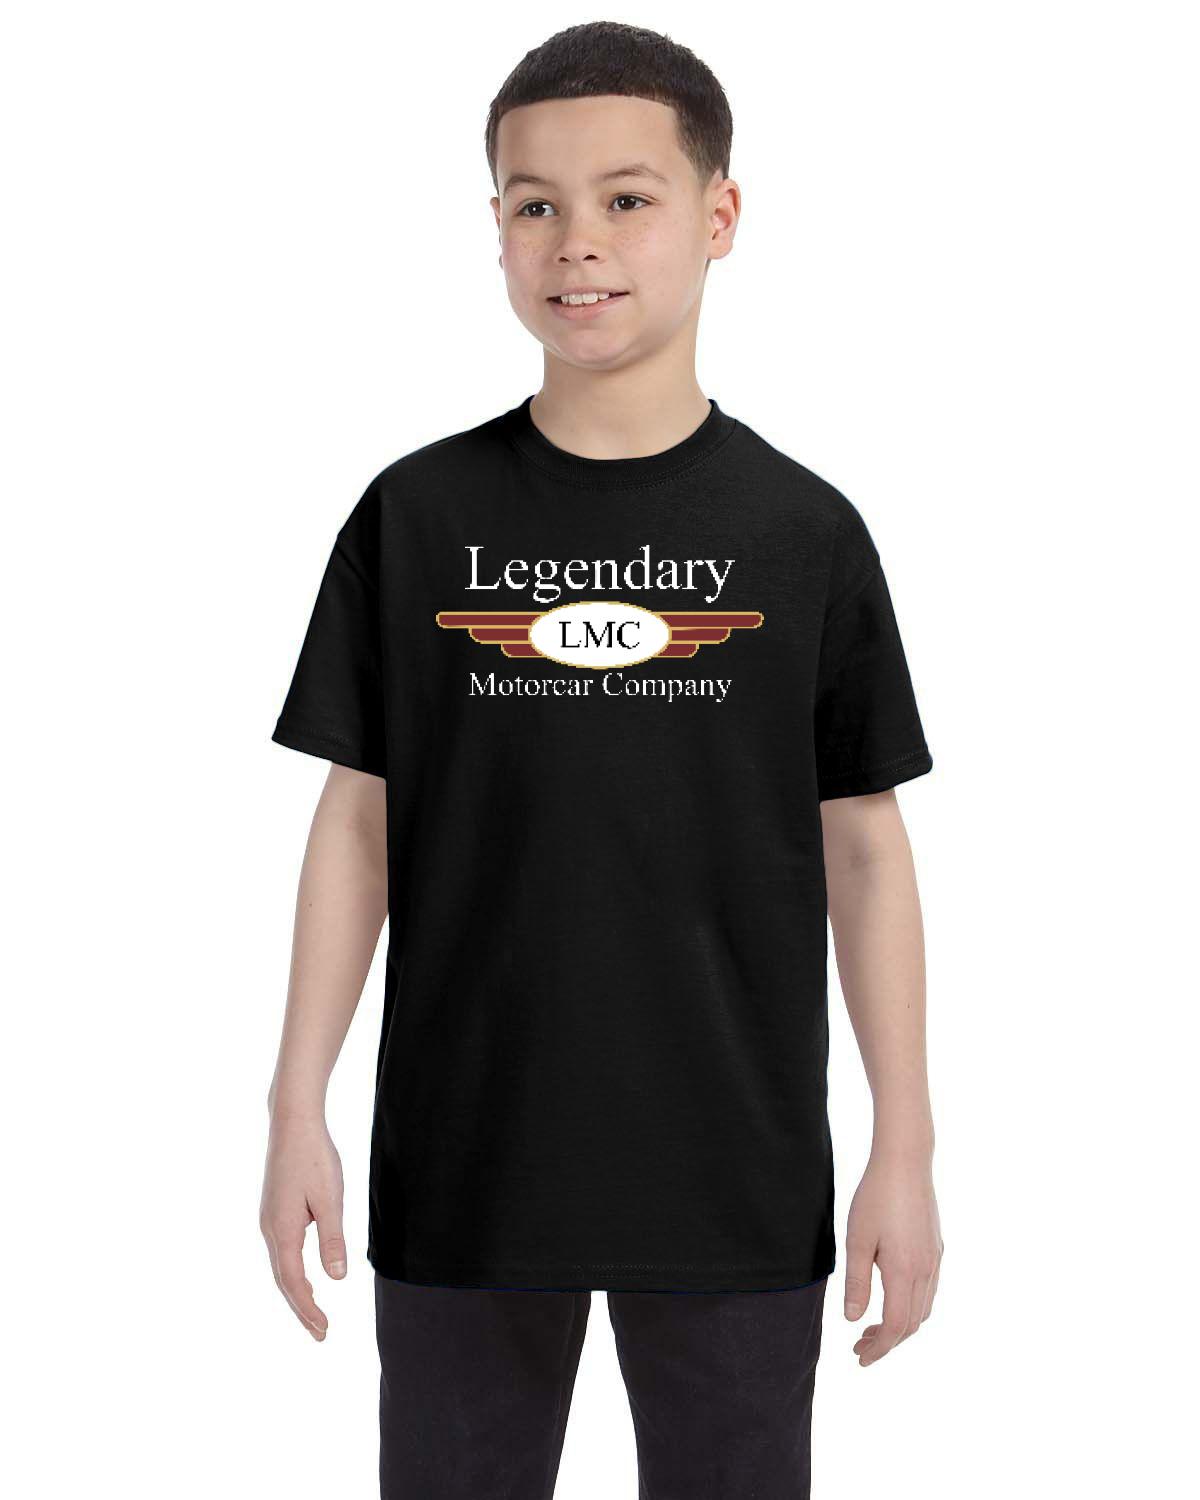 Legendary Motorcar Company Kid's T-Shirt